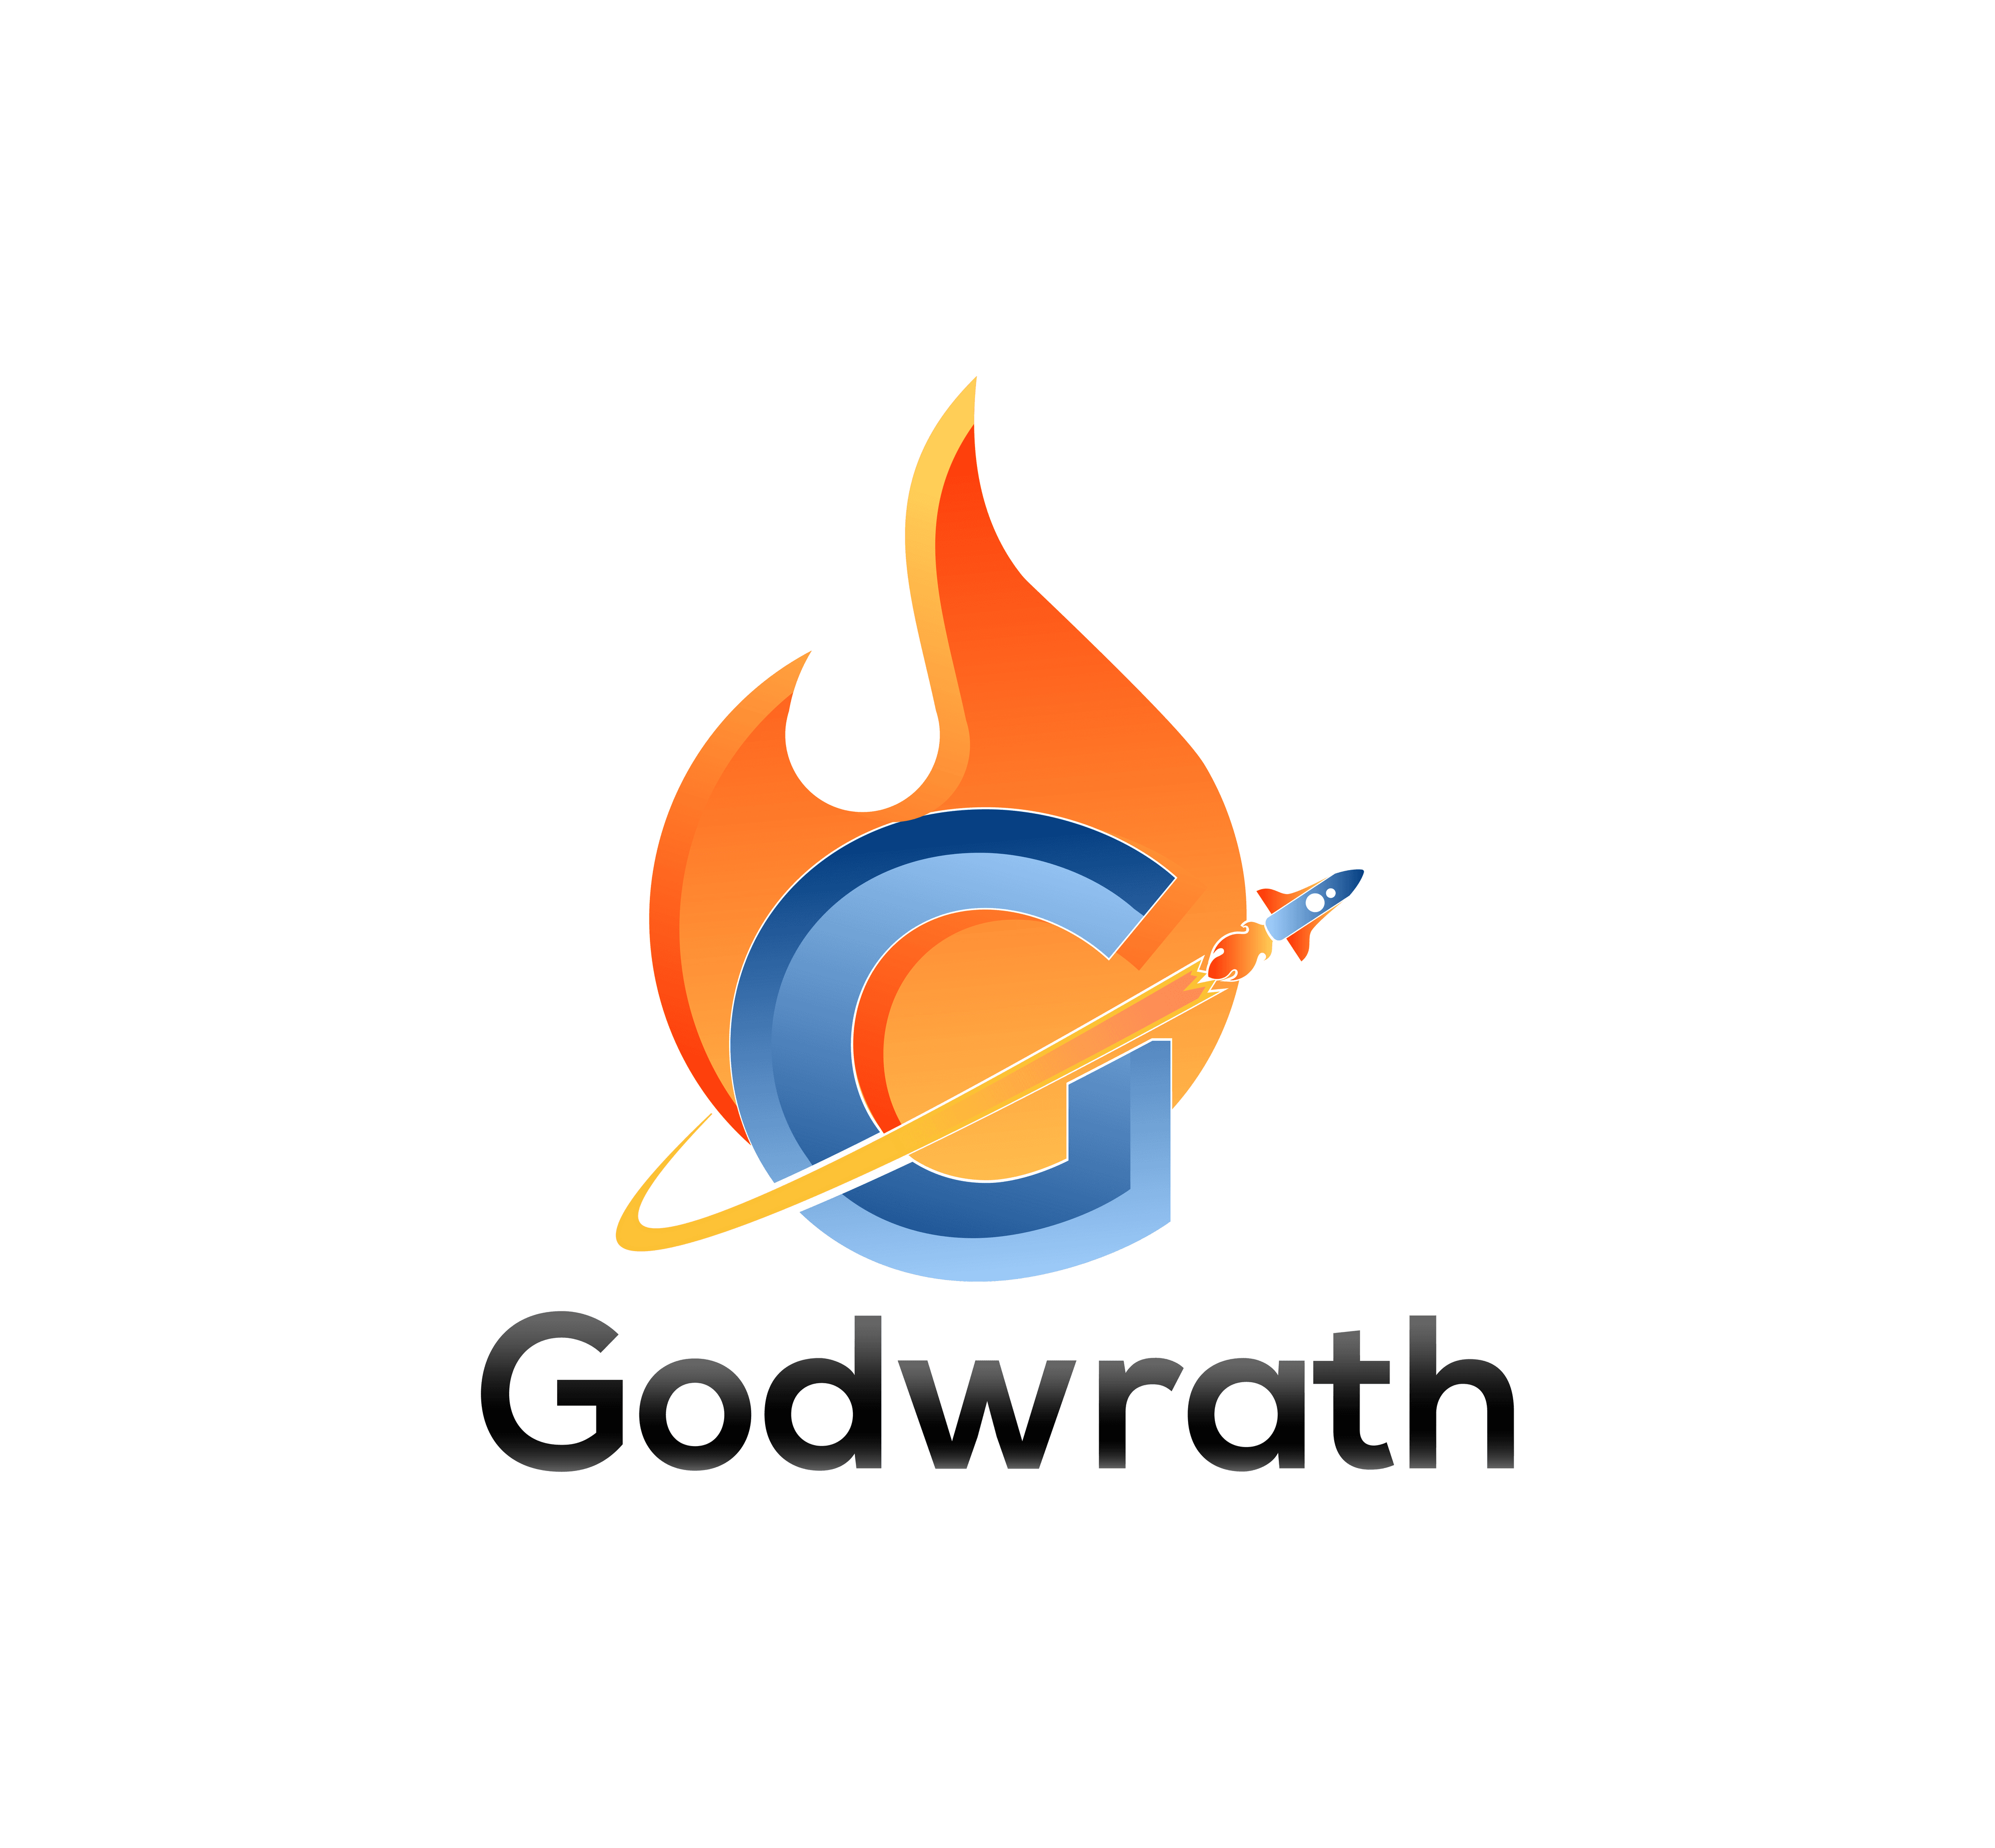 GodwrathCCGArts